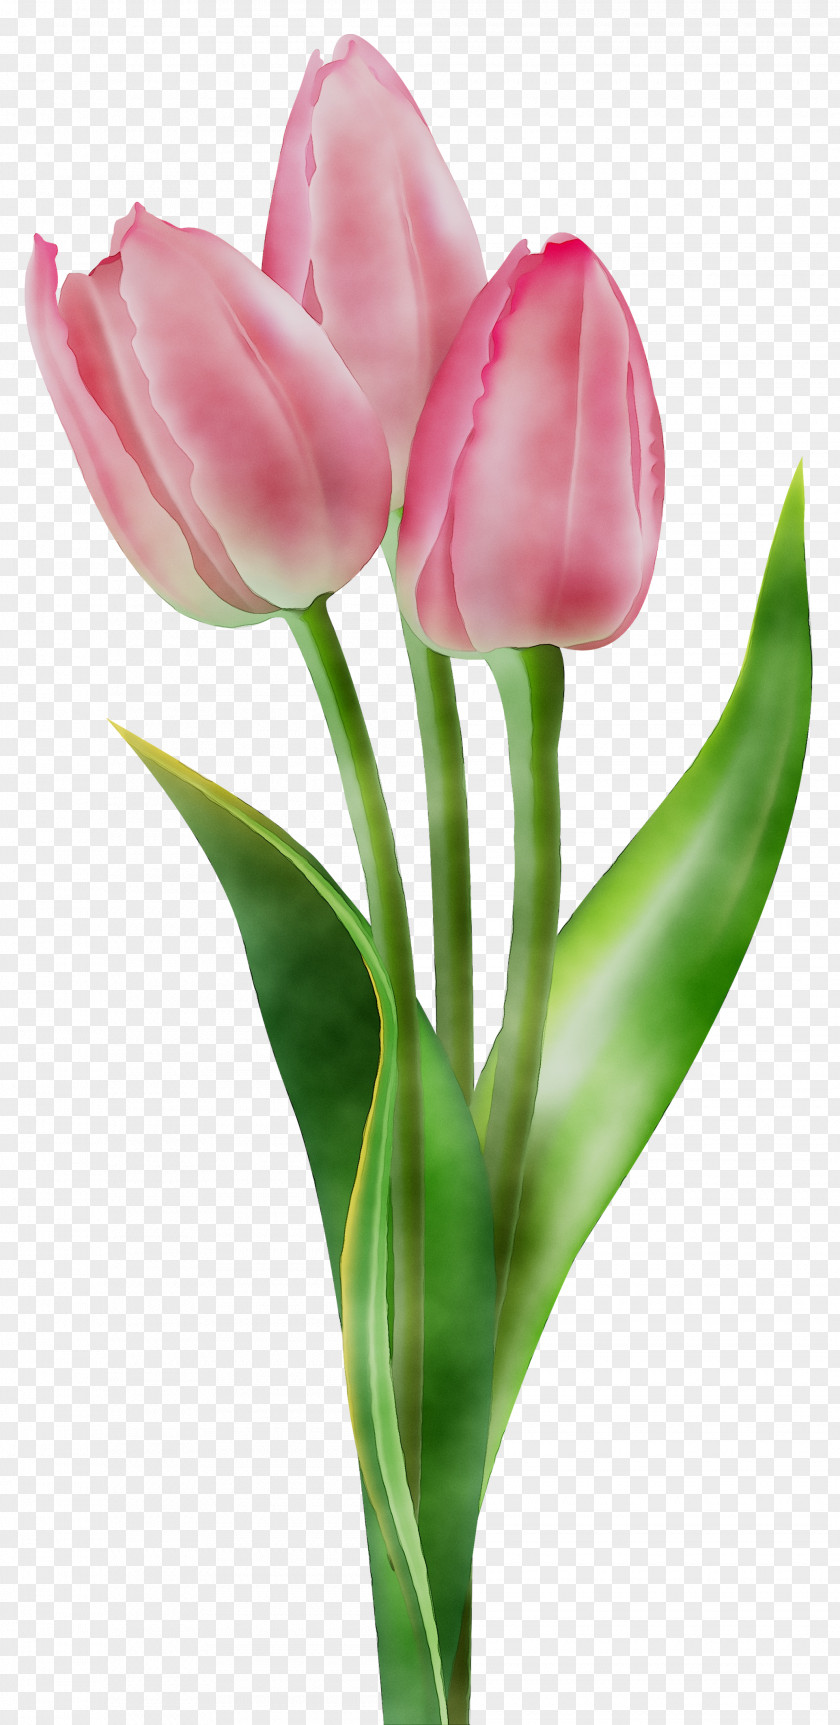 Indira Gandhi Memorial Tulip Garden Clip Art Image Illustration PNG